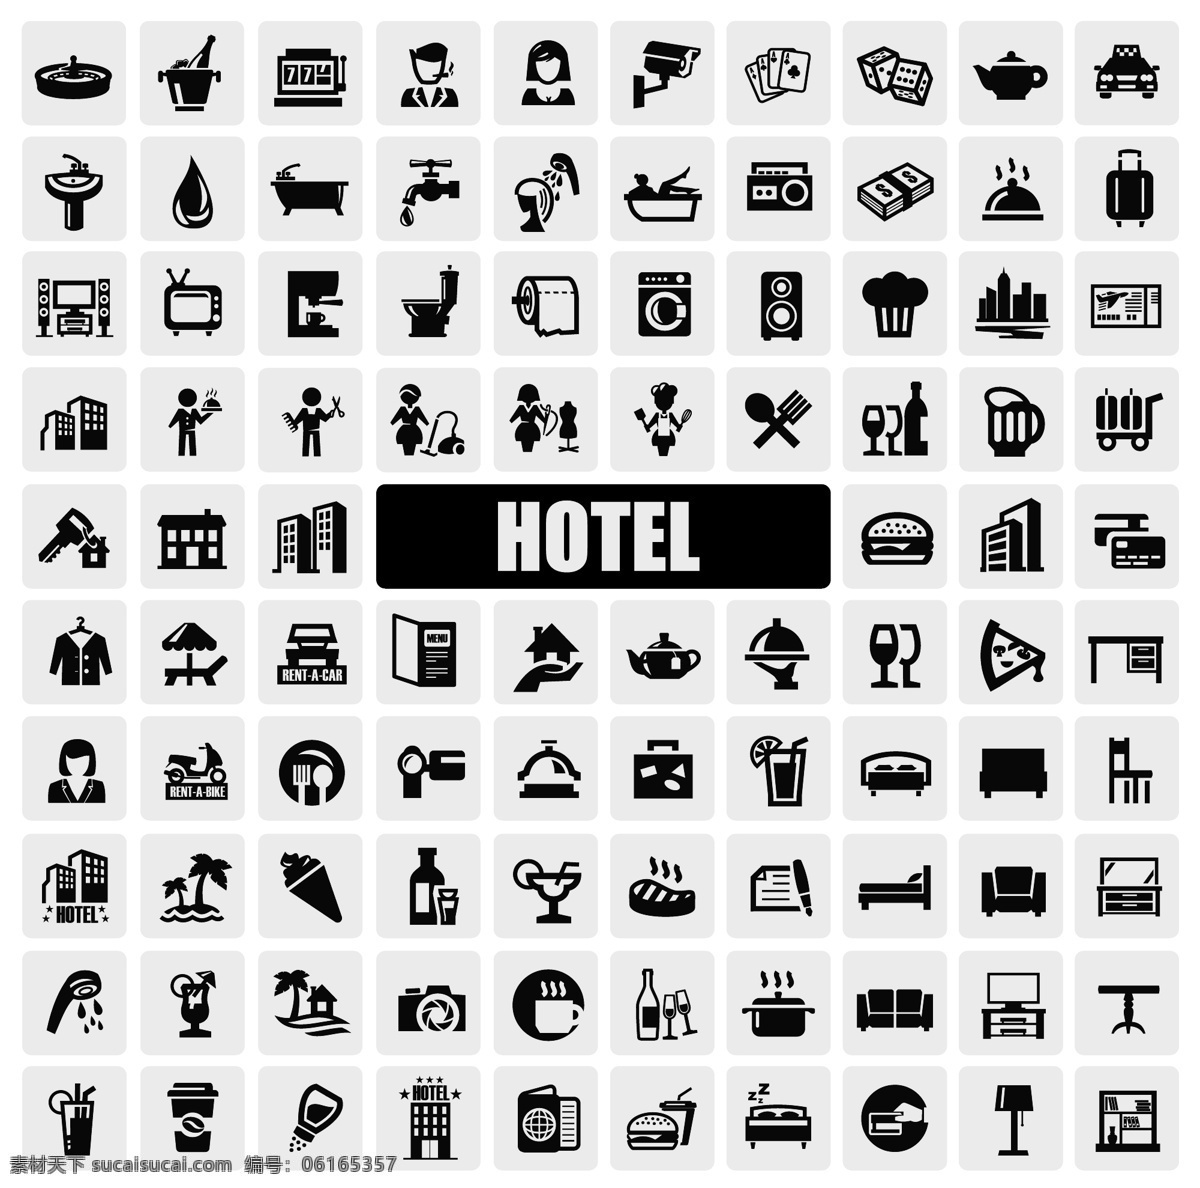 小图标 矢量 hotel 建筑 icon